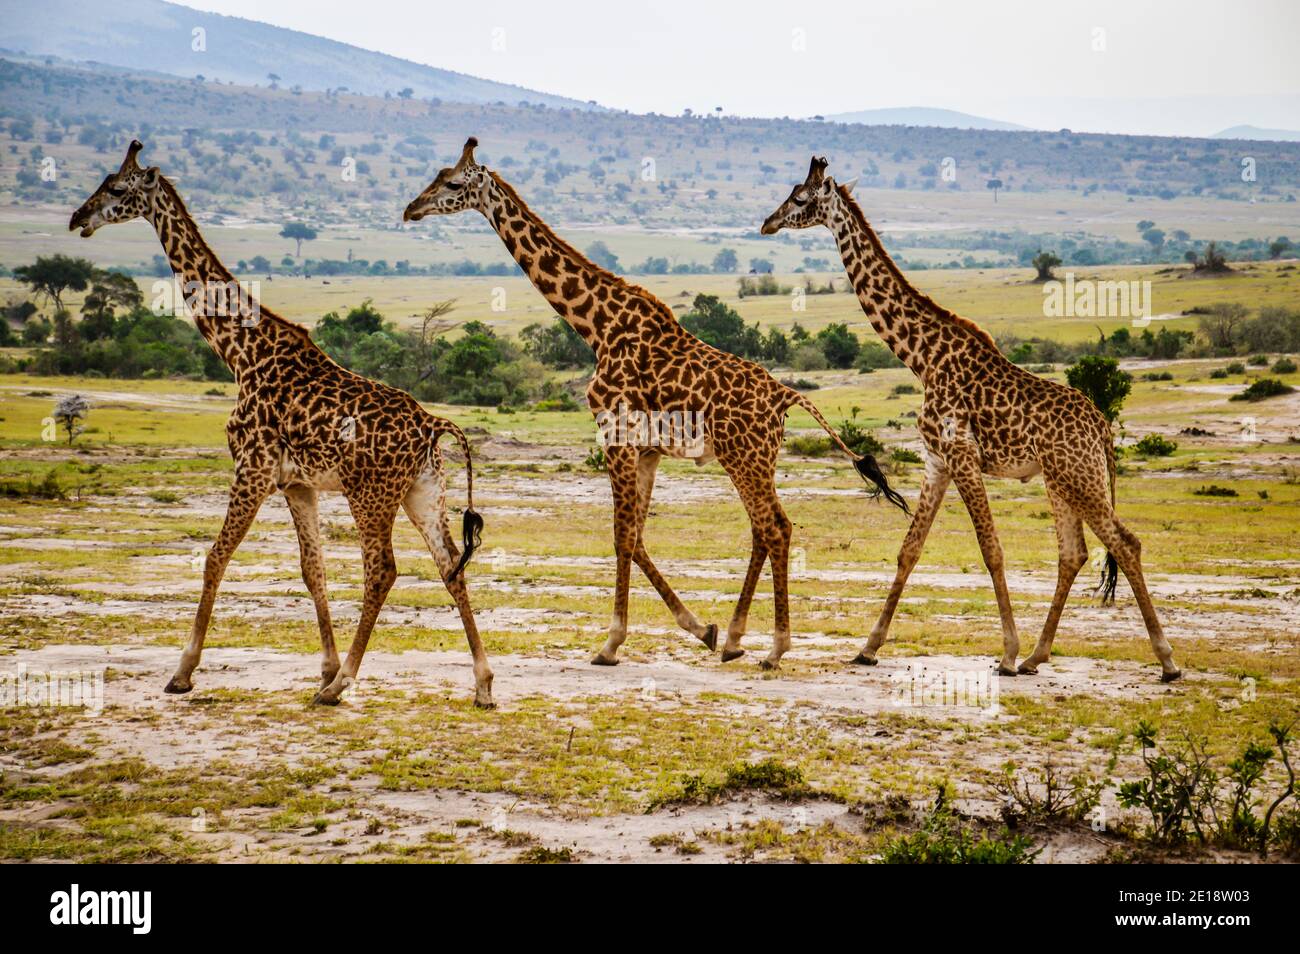 Three giraffes walking together in Maasai Mara. Stock Photo